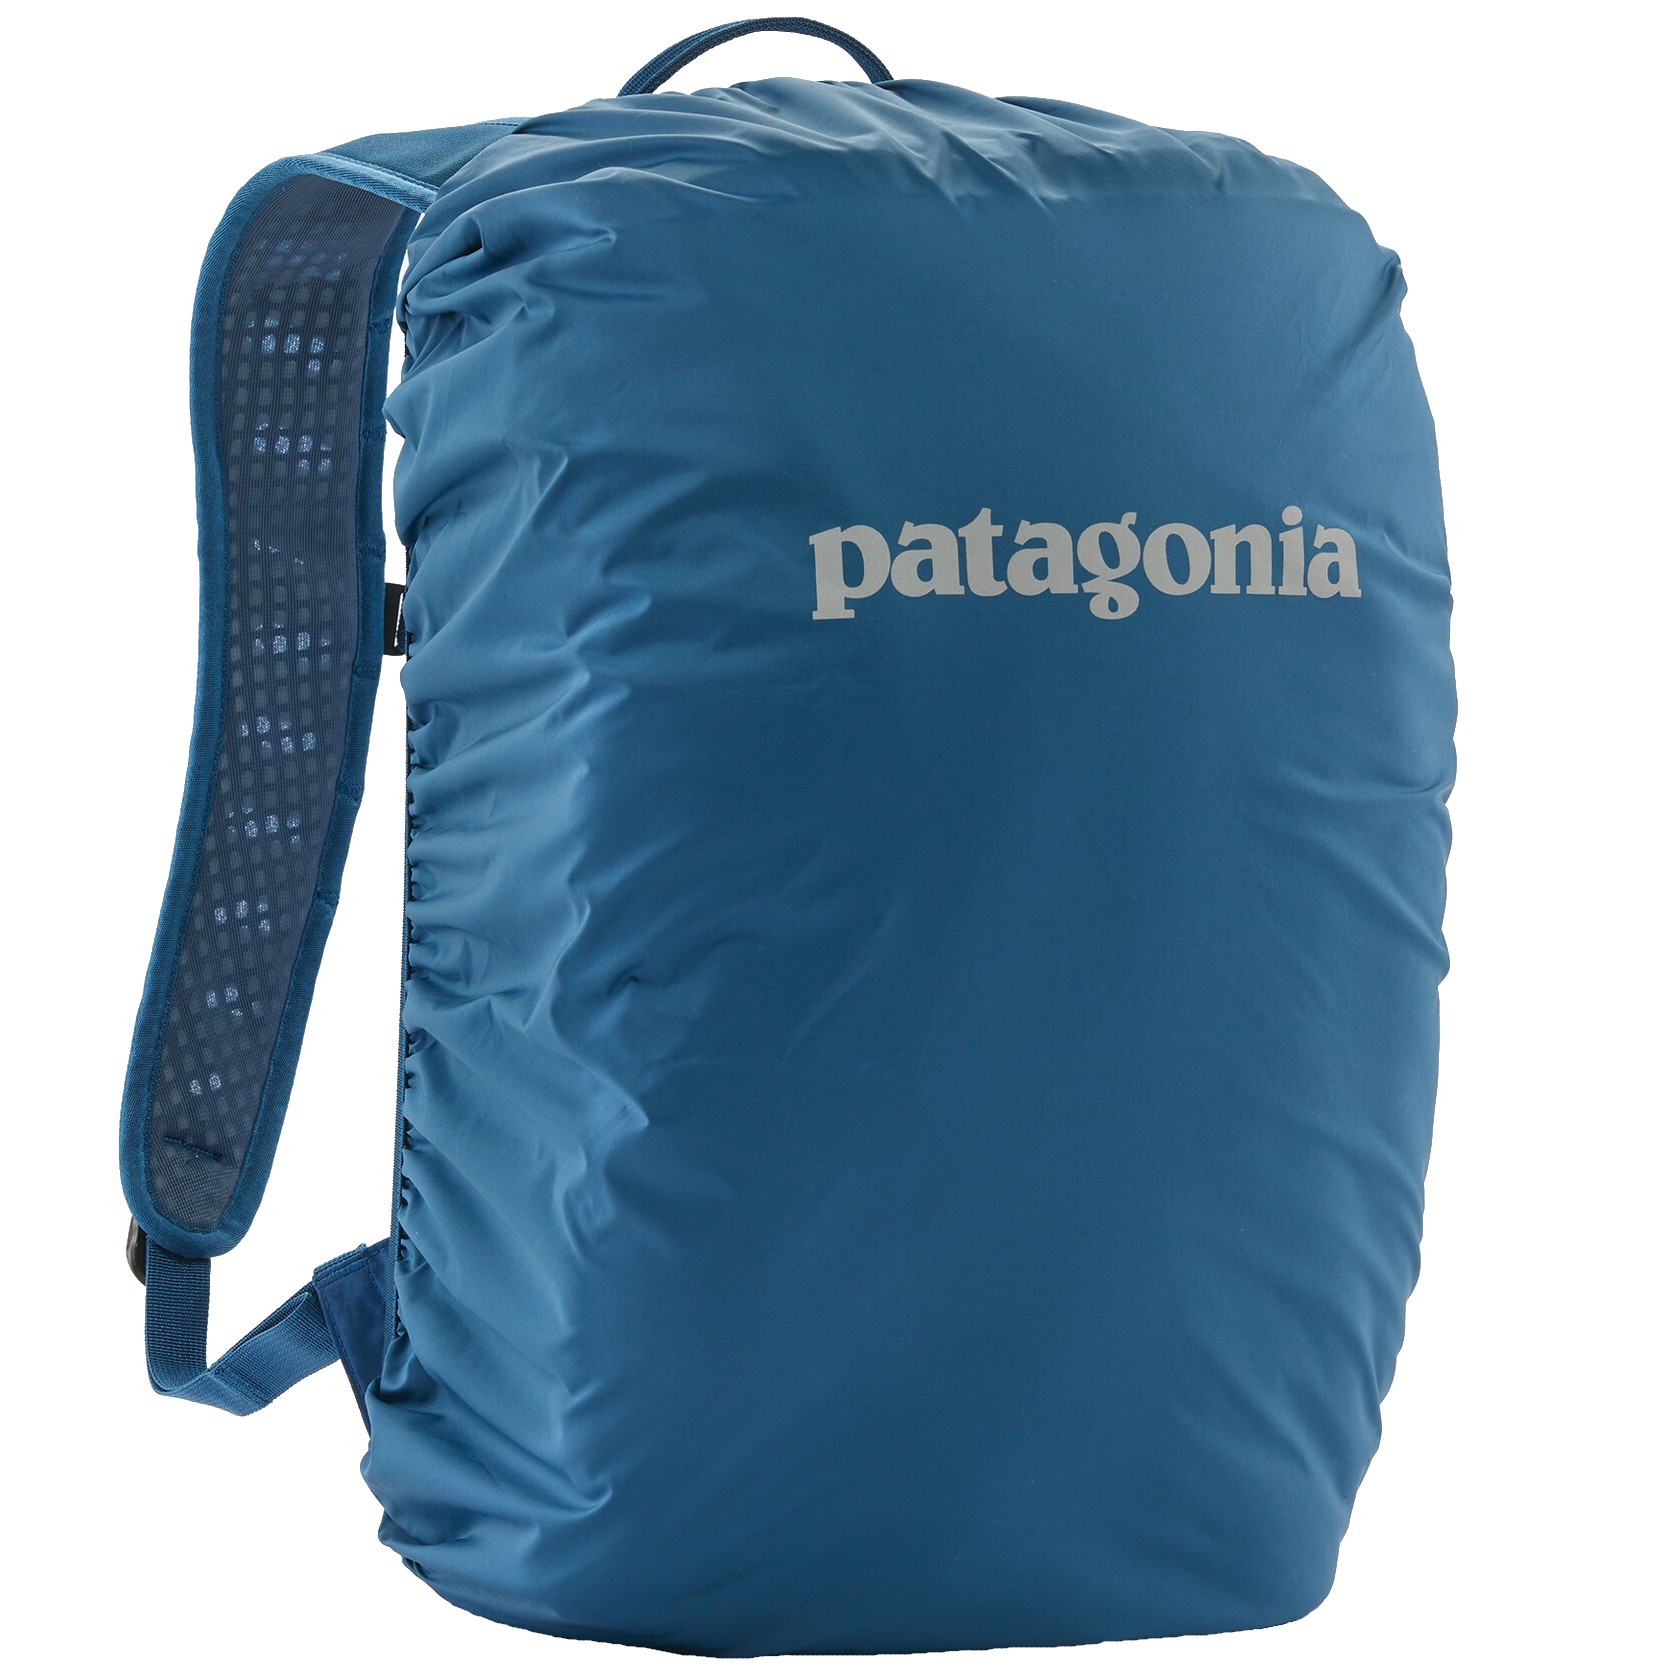 Patagonia Altvia 14 Day Pack/Hiking Backpack